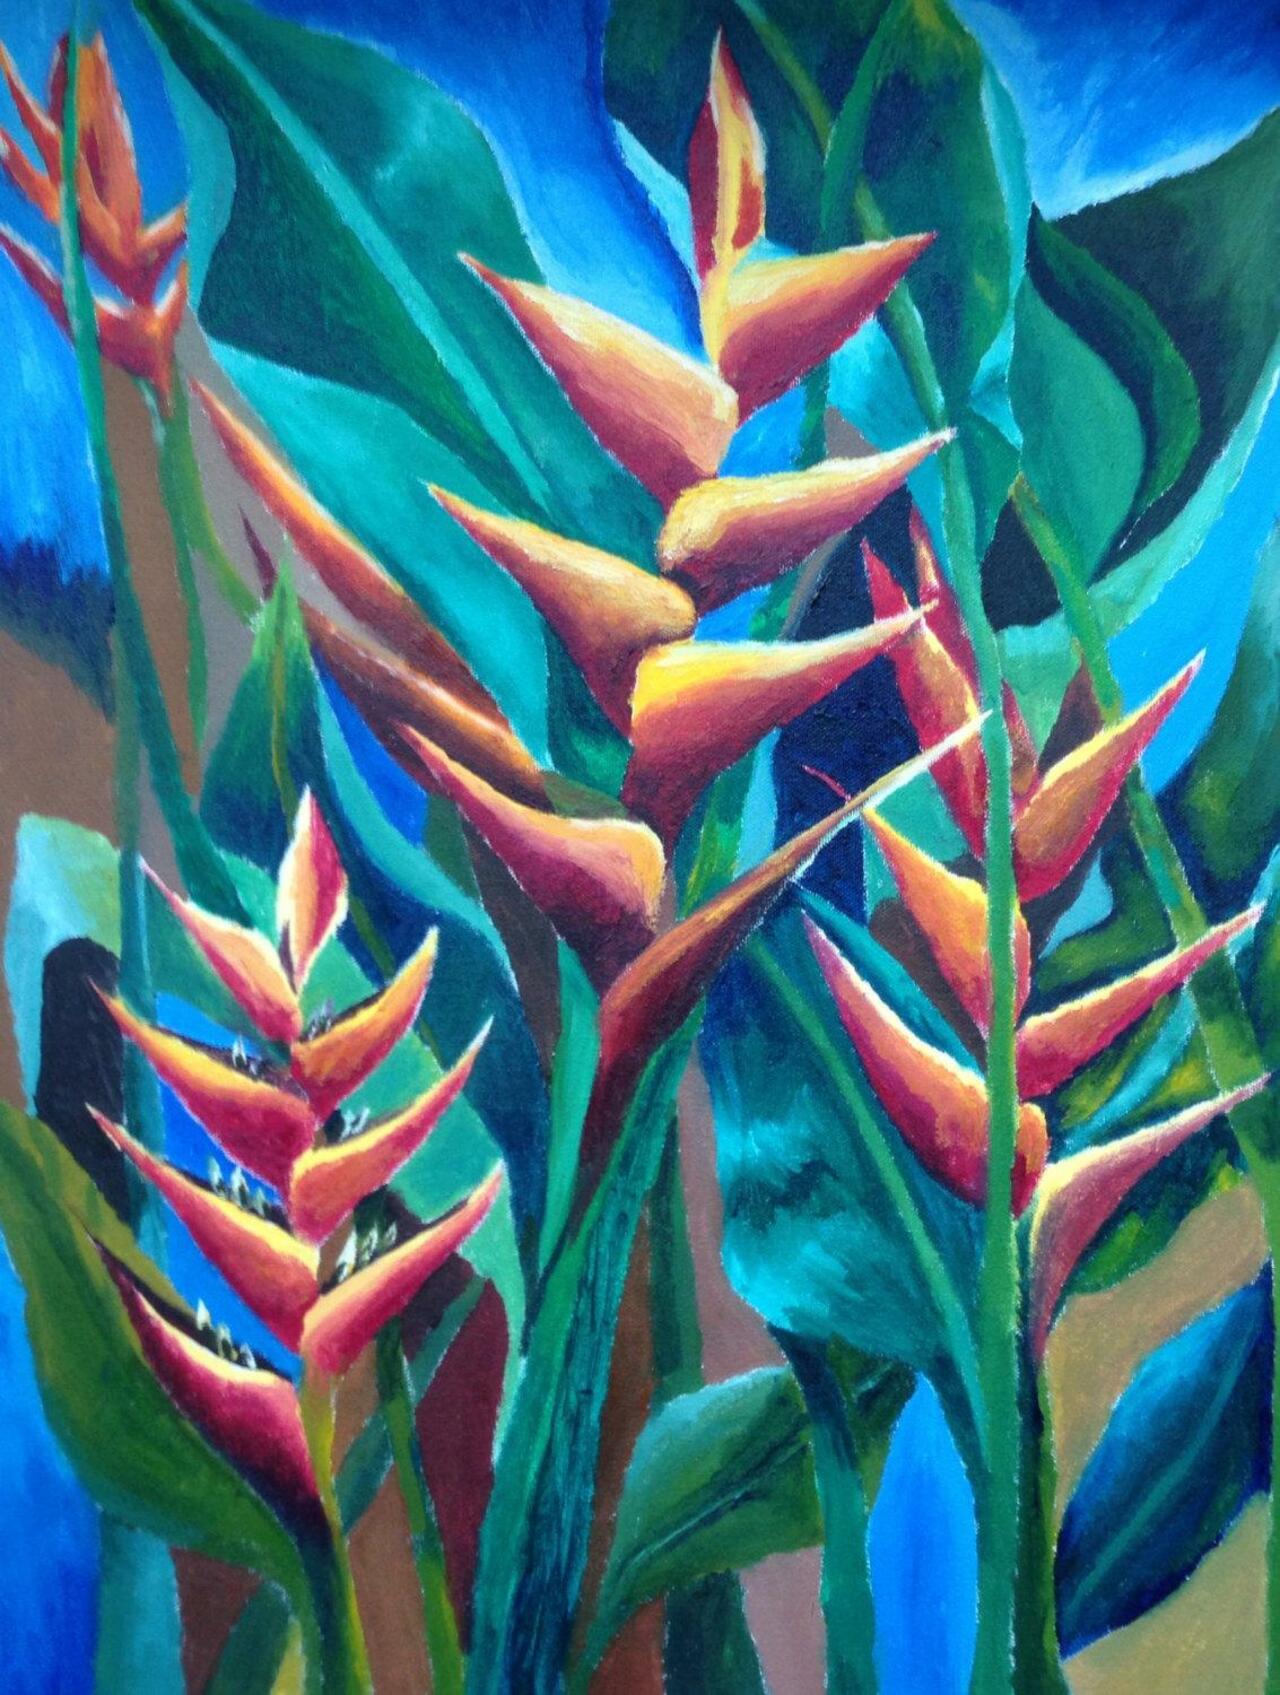 #Art  #StillLife #Heliconias , Giclee on Canvas… https://www.etsy.com/listing/162406030/art-painting-still-life-heliconias?utm_source=etsyfu&utm_medium=api&utm_campaign=api #Etsy #GicleeOnCanvas http://t.co/CXOYQ36cVB